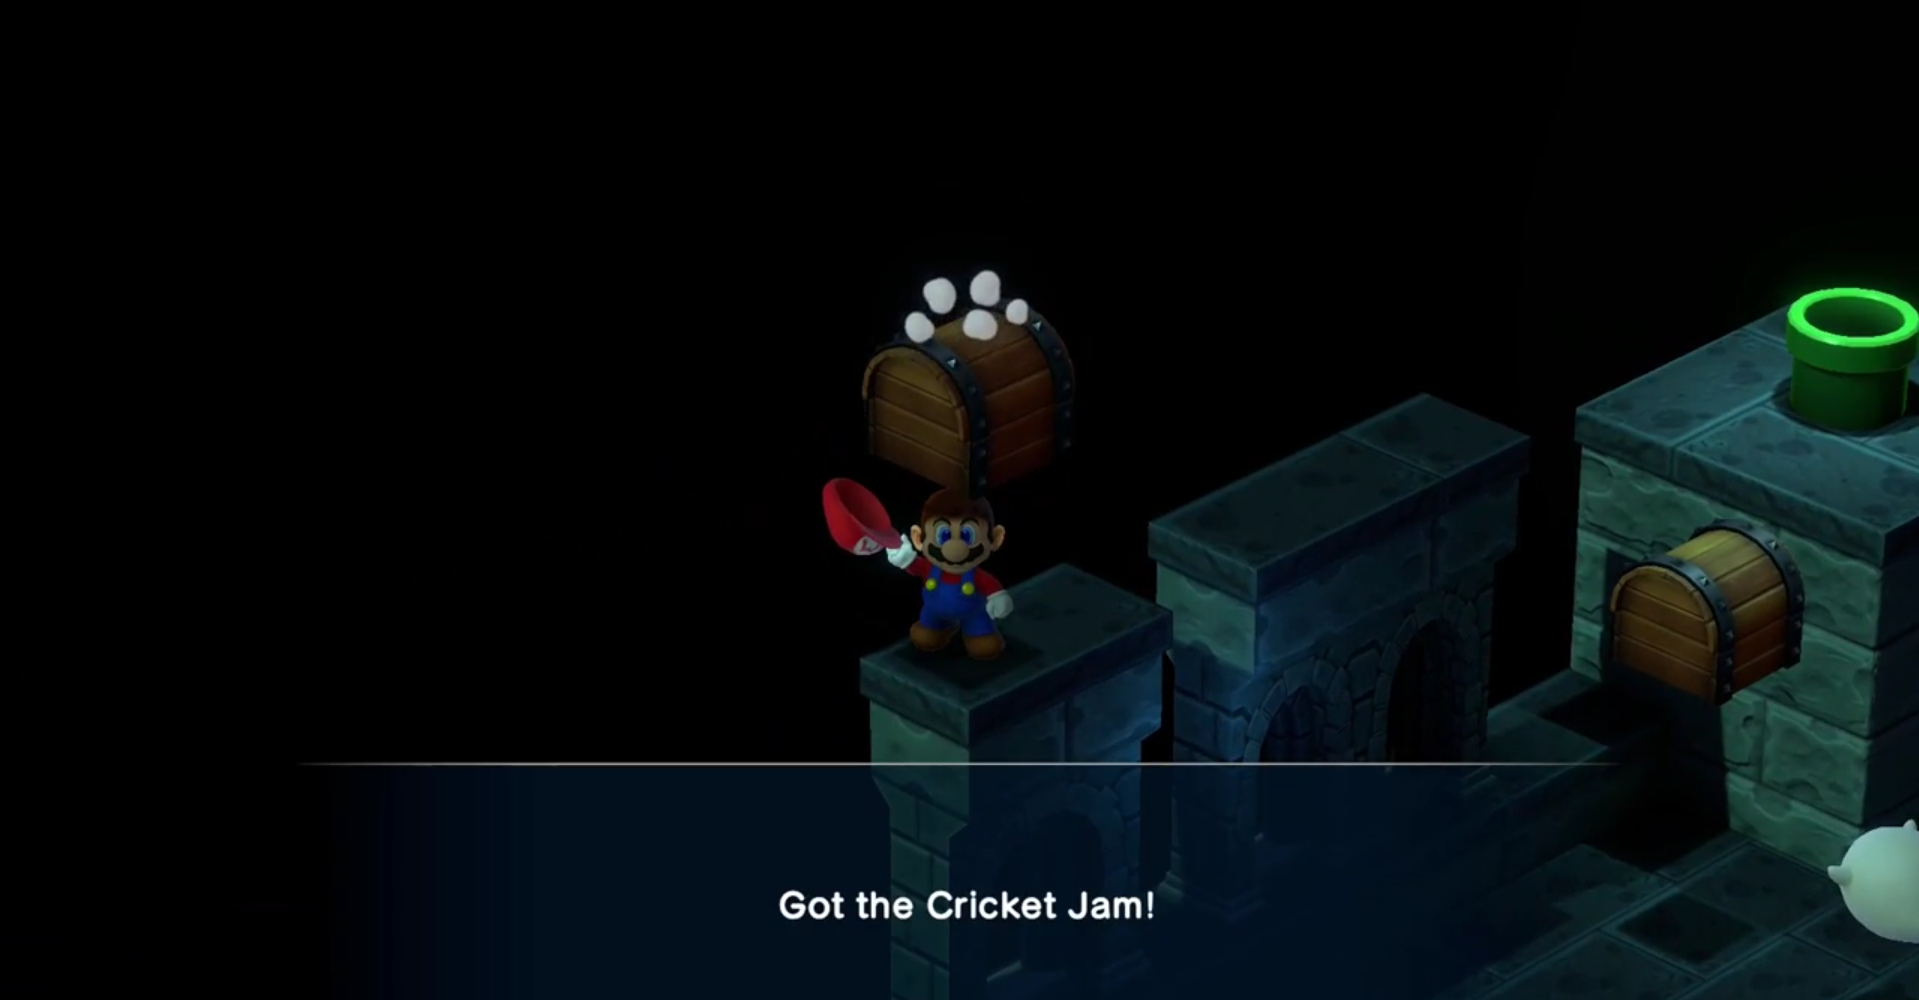 Mario getting the Cricket Jam in Super Mario RPG.